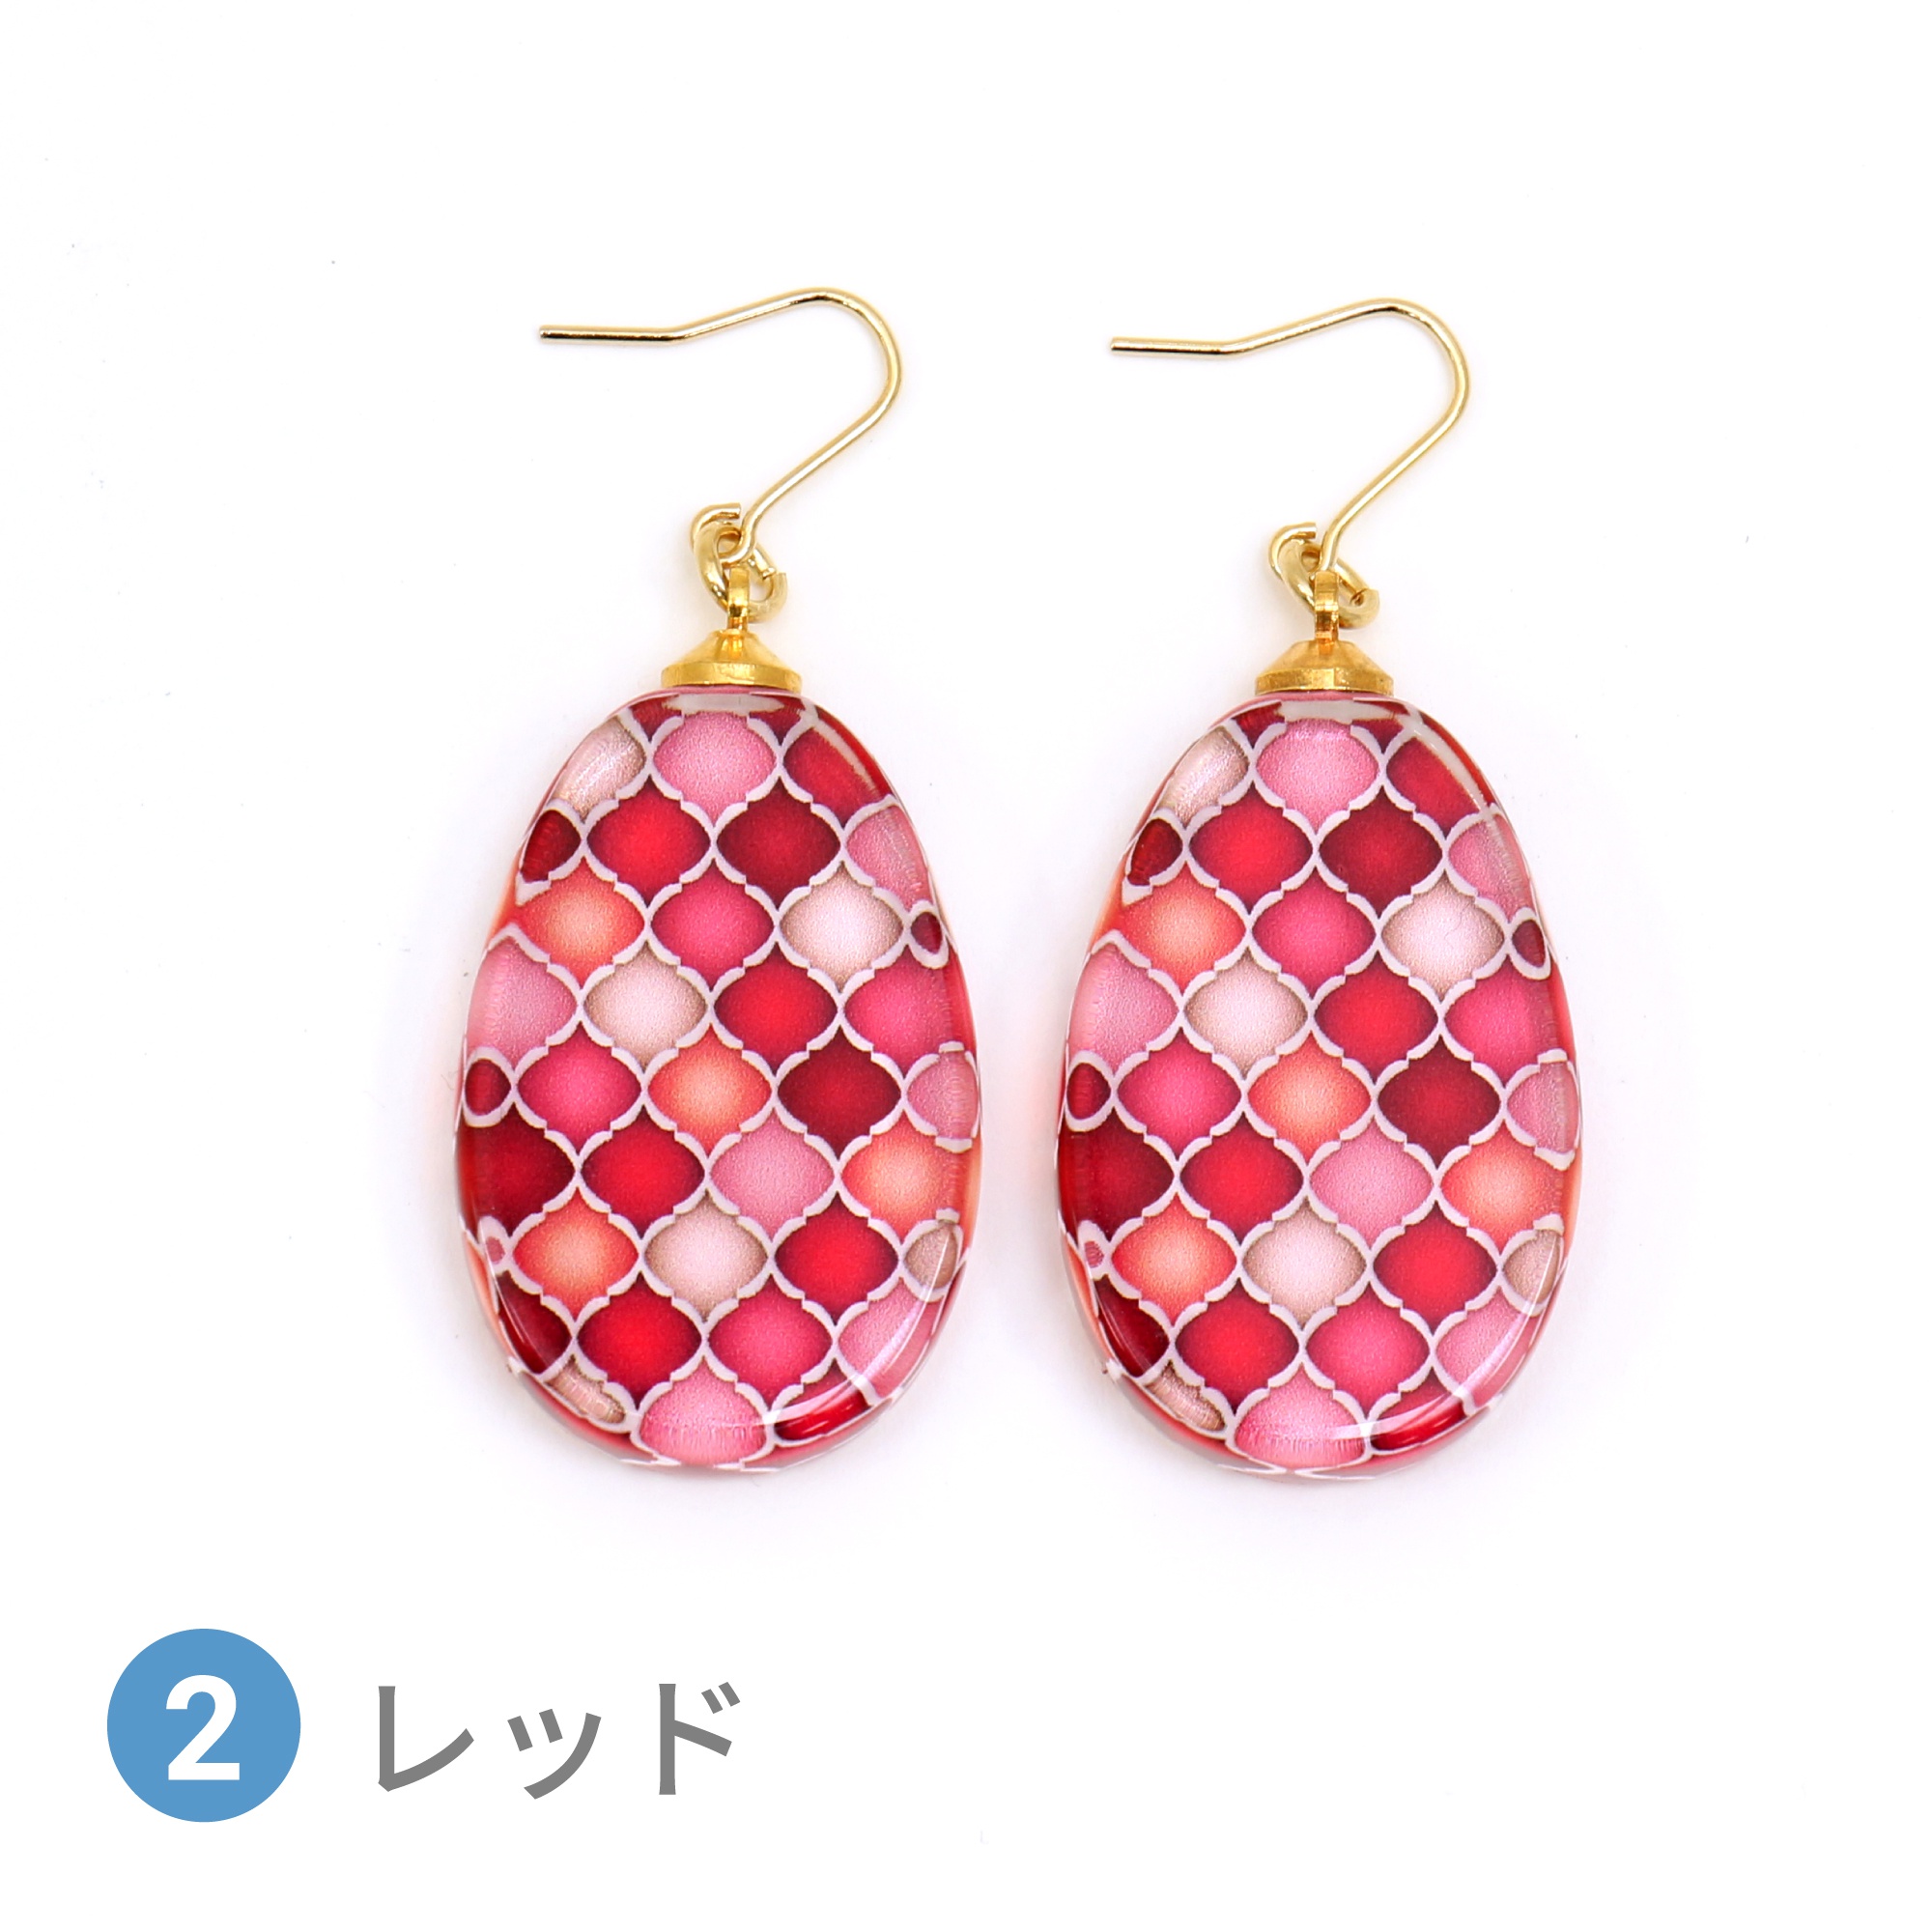 Glass accessories Pierced Earring MOROCCAN red drop shape